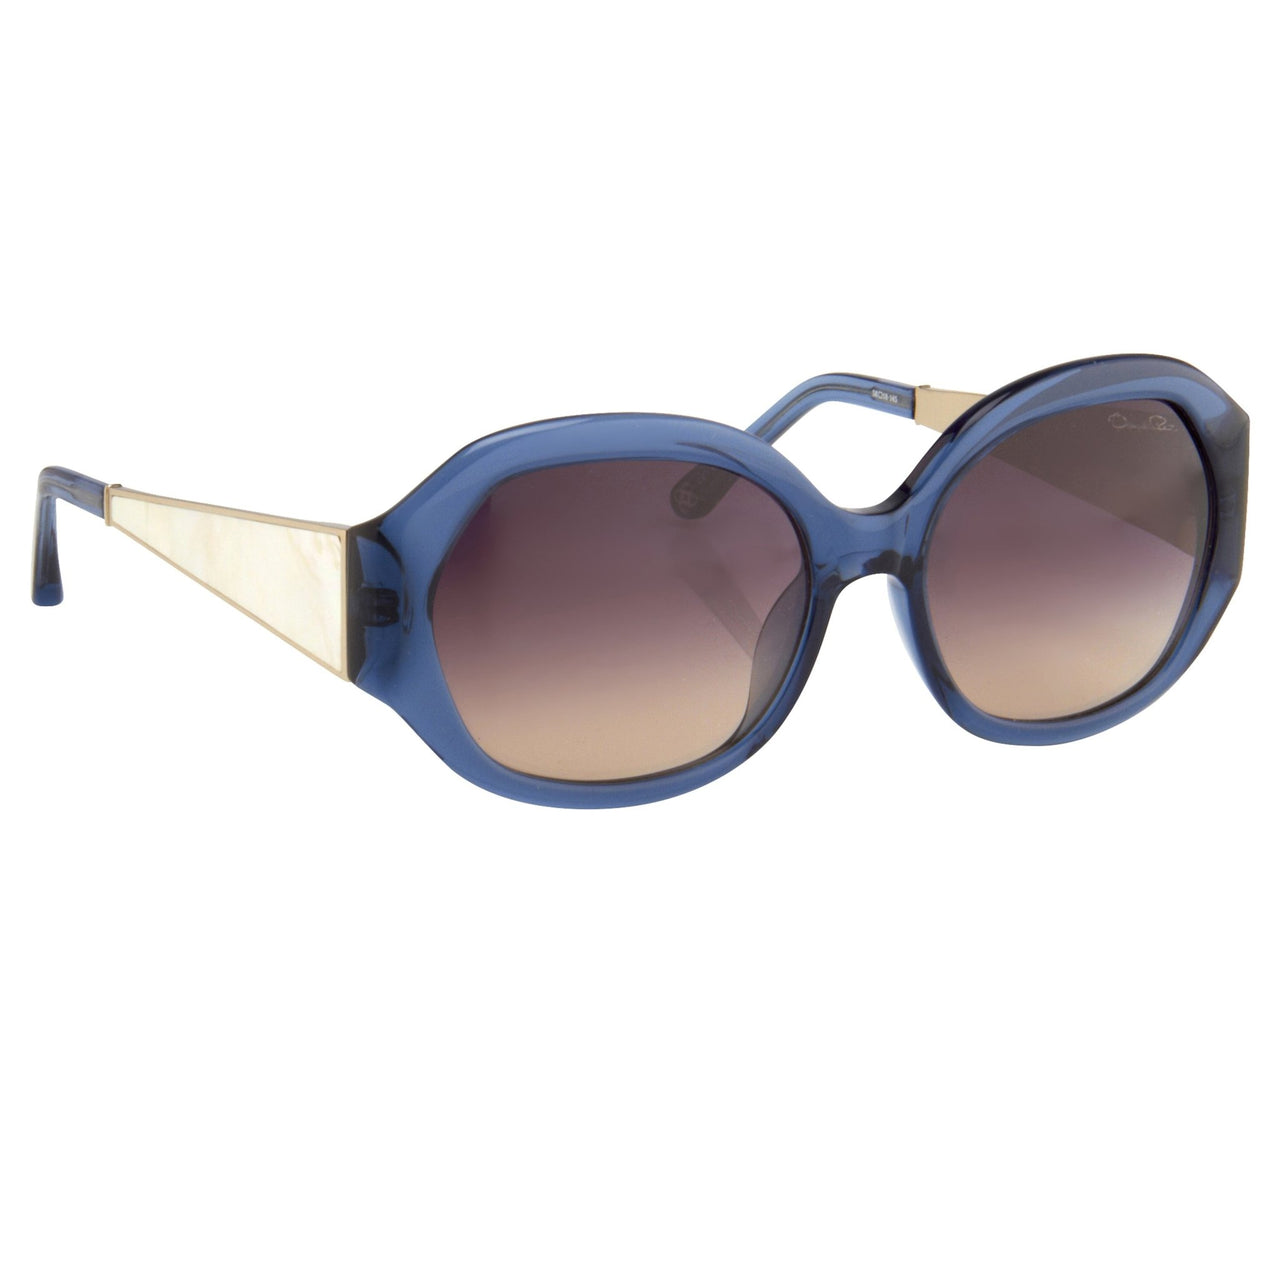 Oscar De La Renta Sunglasses Jackie O Sapphire Blue and Grey Lenses - ODLR34C5SUN - Watches & Crystals